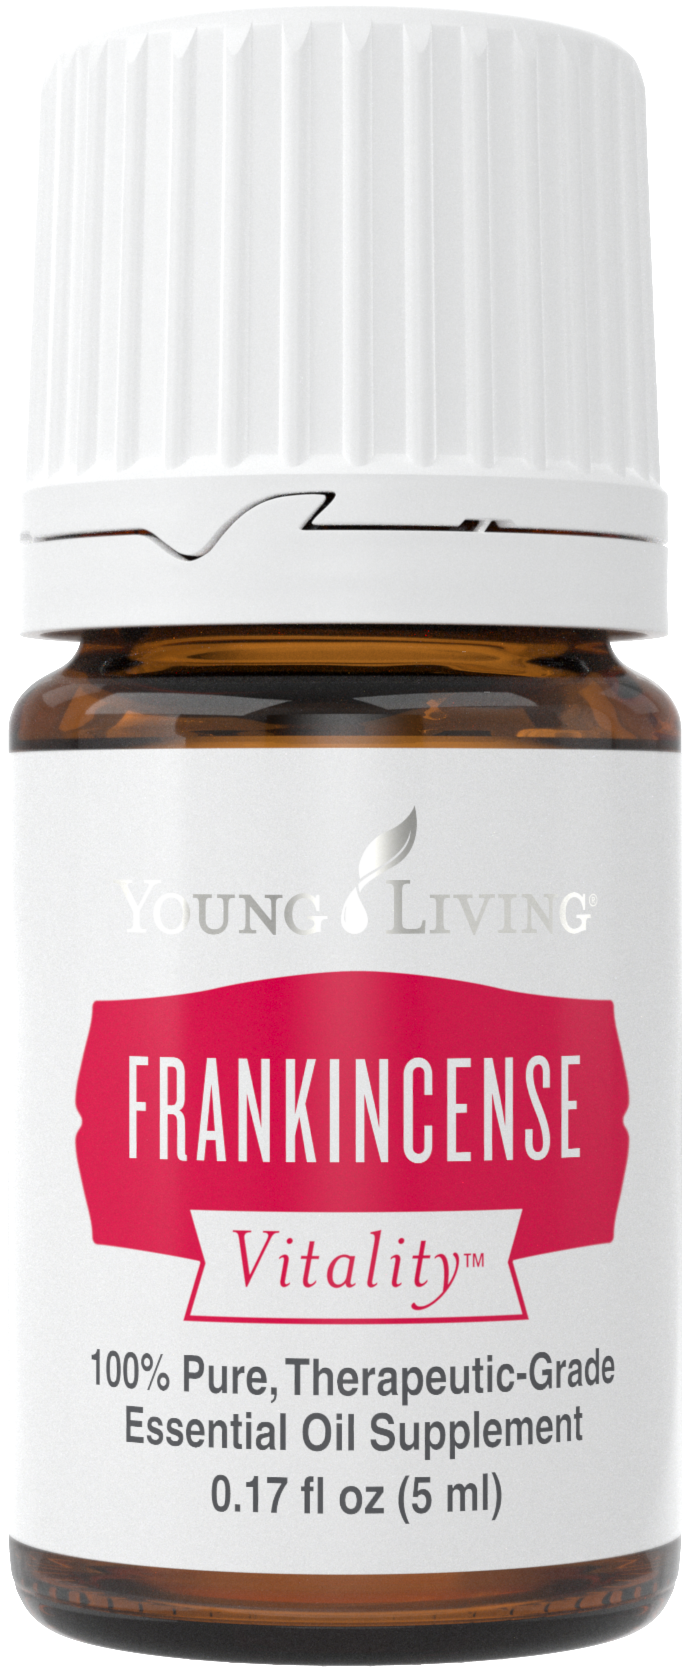 Frankincense Vitality Silo.png